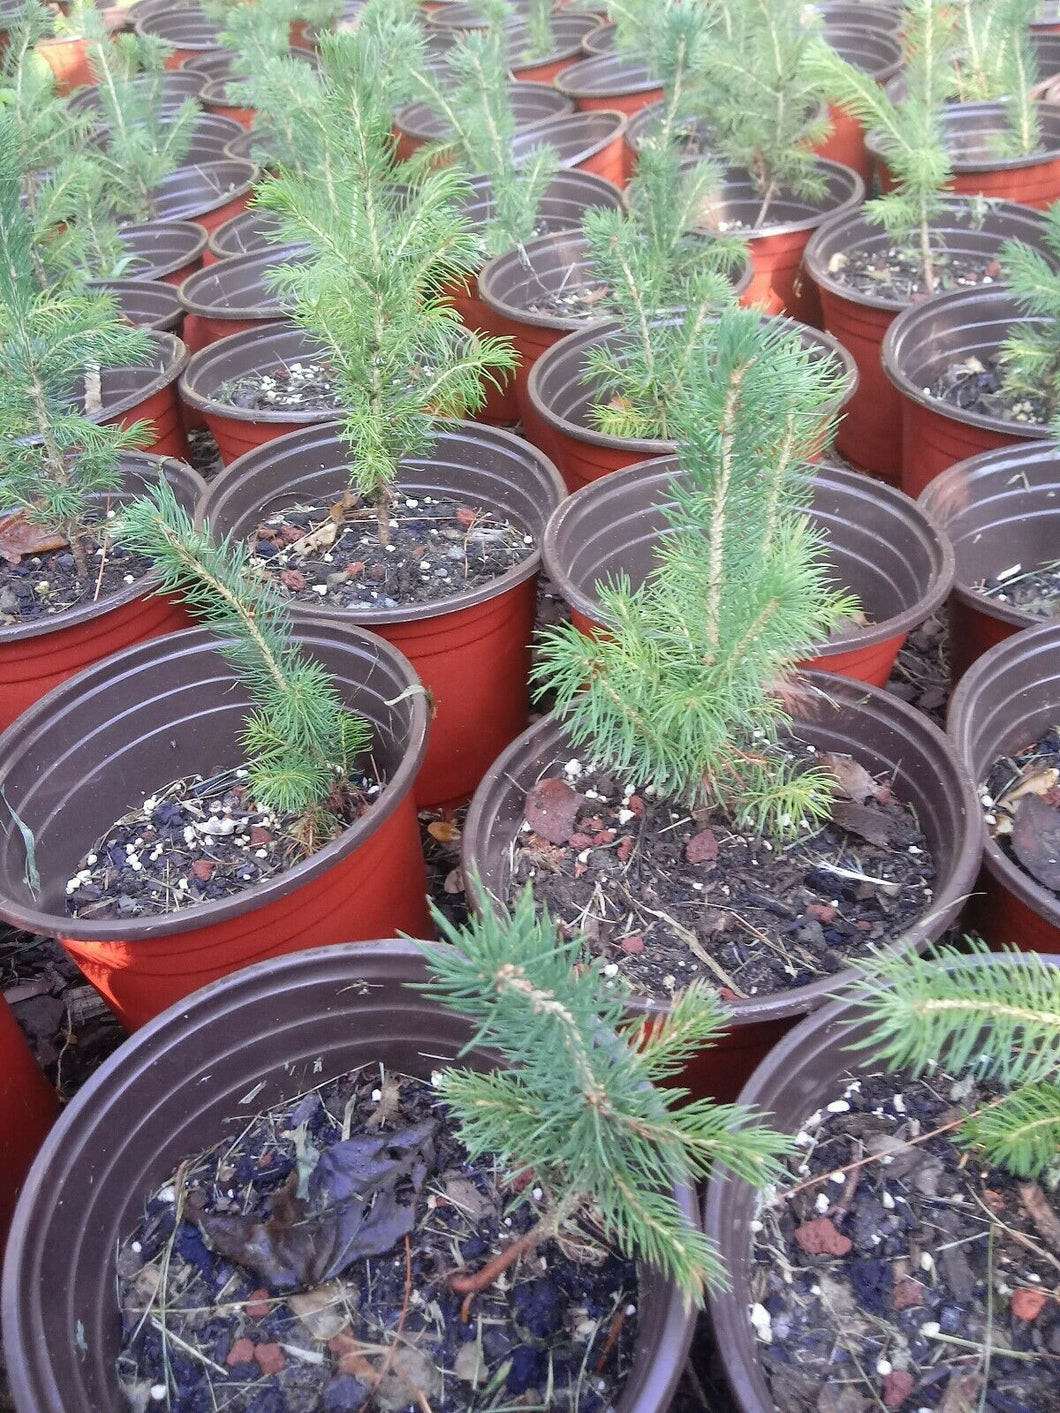 Black Hills Spruce Seedling (picea glauca densata) age 5-6 new photo coming